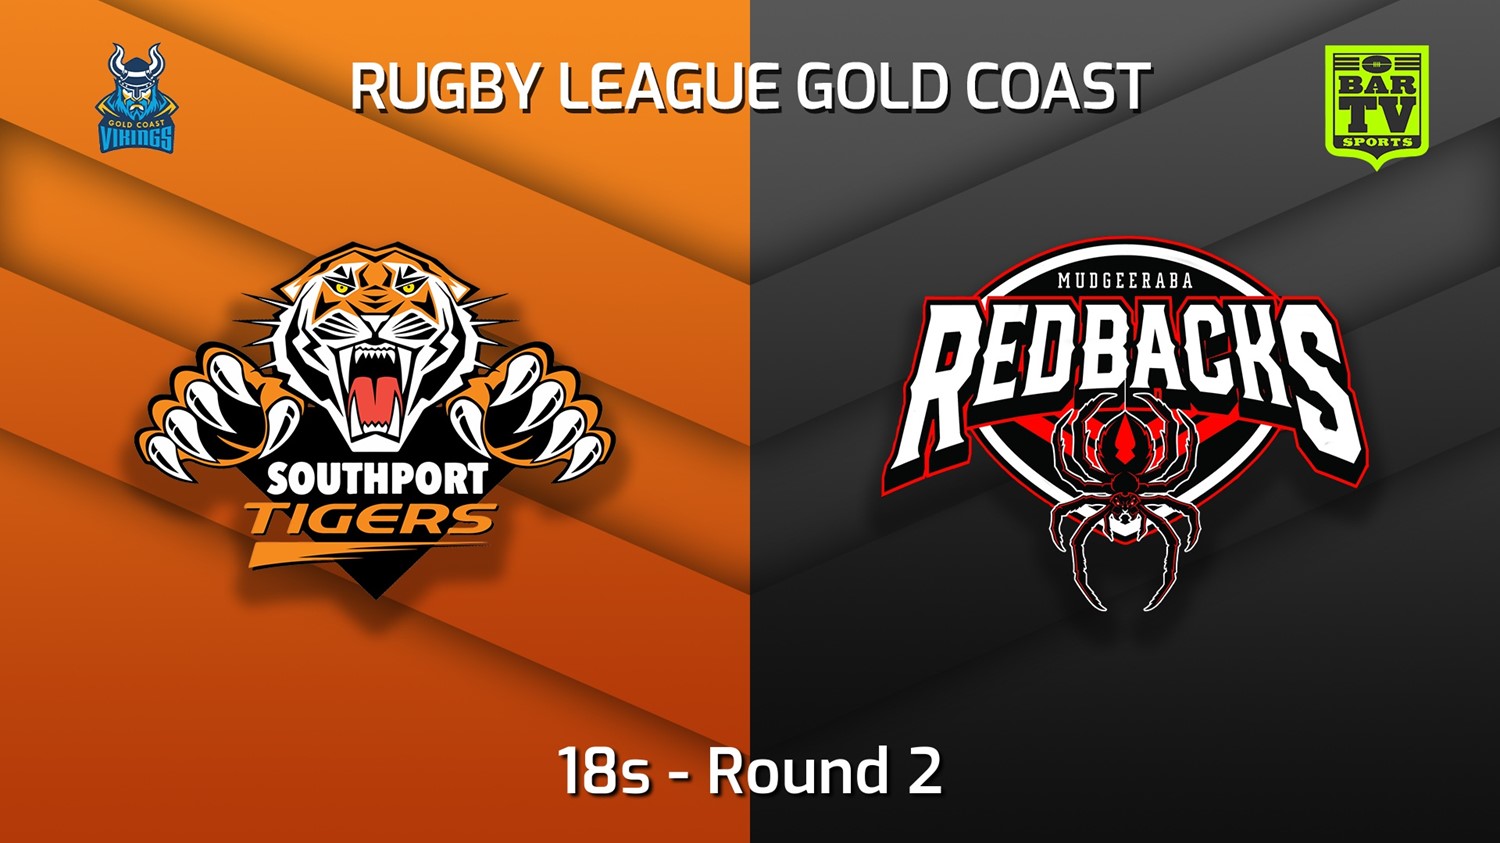 220403-Gold Coast Round 2 - 18s - Southport Tigers v Mudgeeraba Redbacks Slate Image